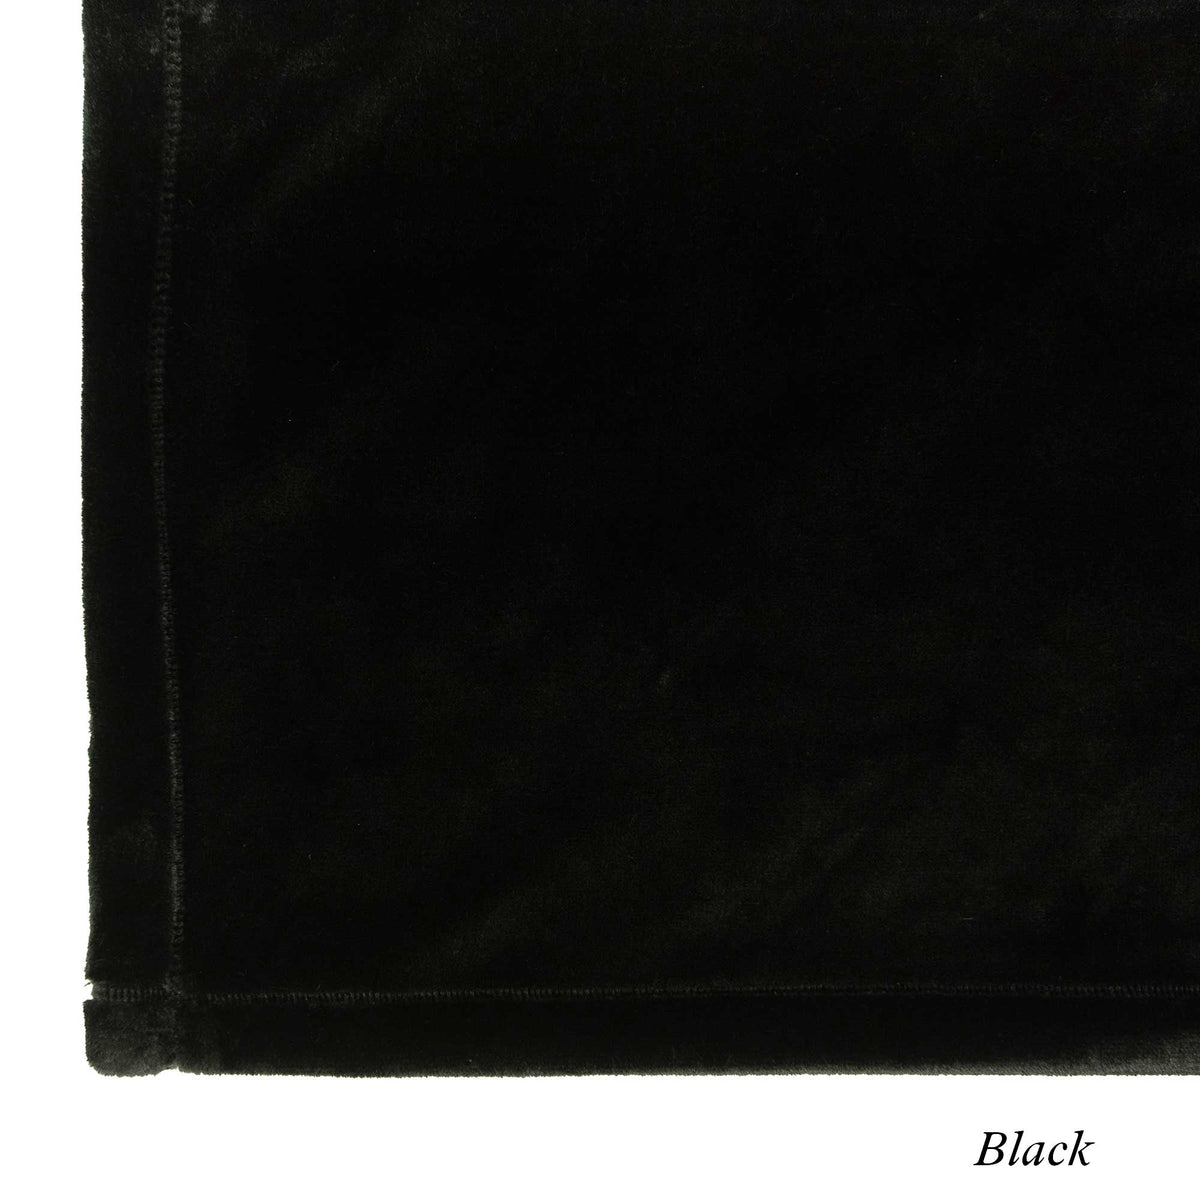 Black - The Best Fleece Blankets - Custom Size Luster Loft Fleece Blankets - American Blanket Company